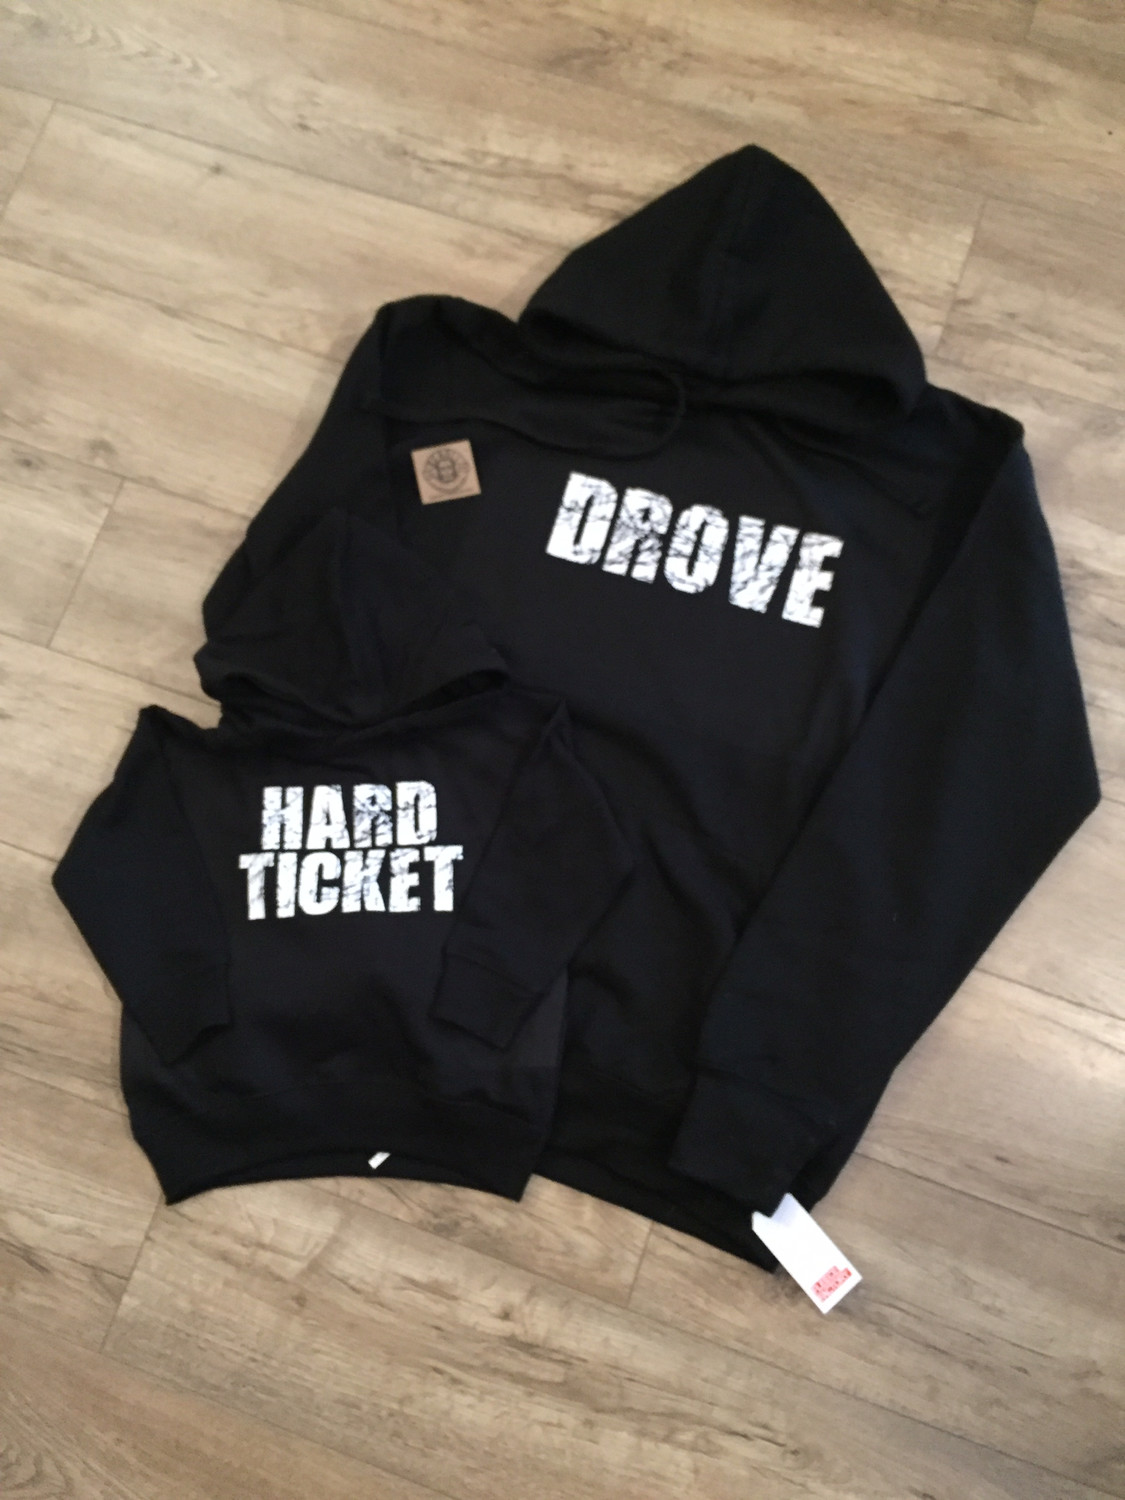 Hard Ticket/Drove